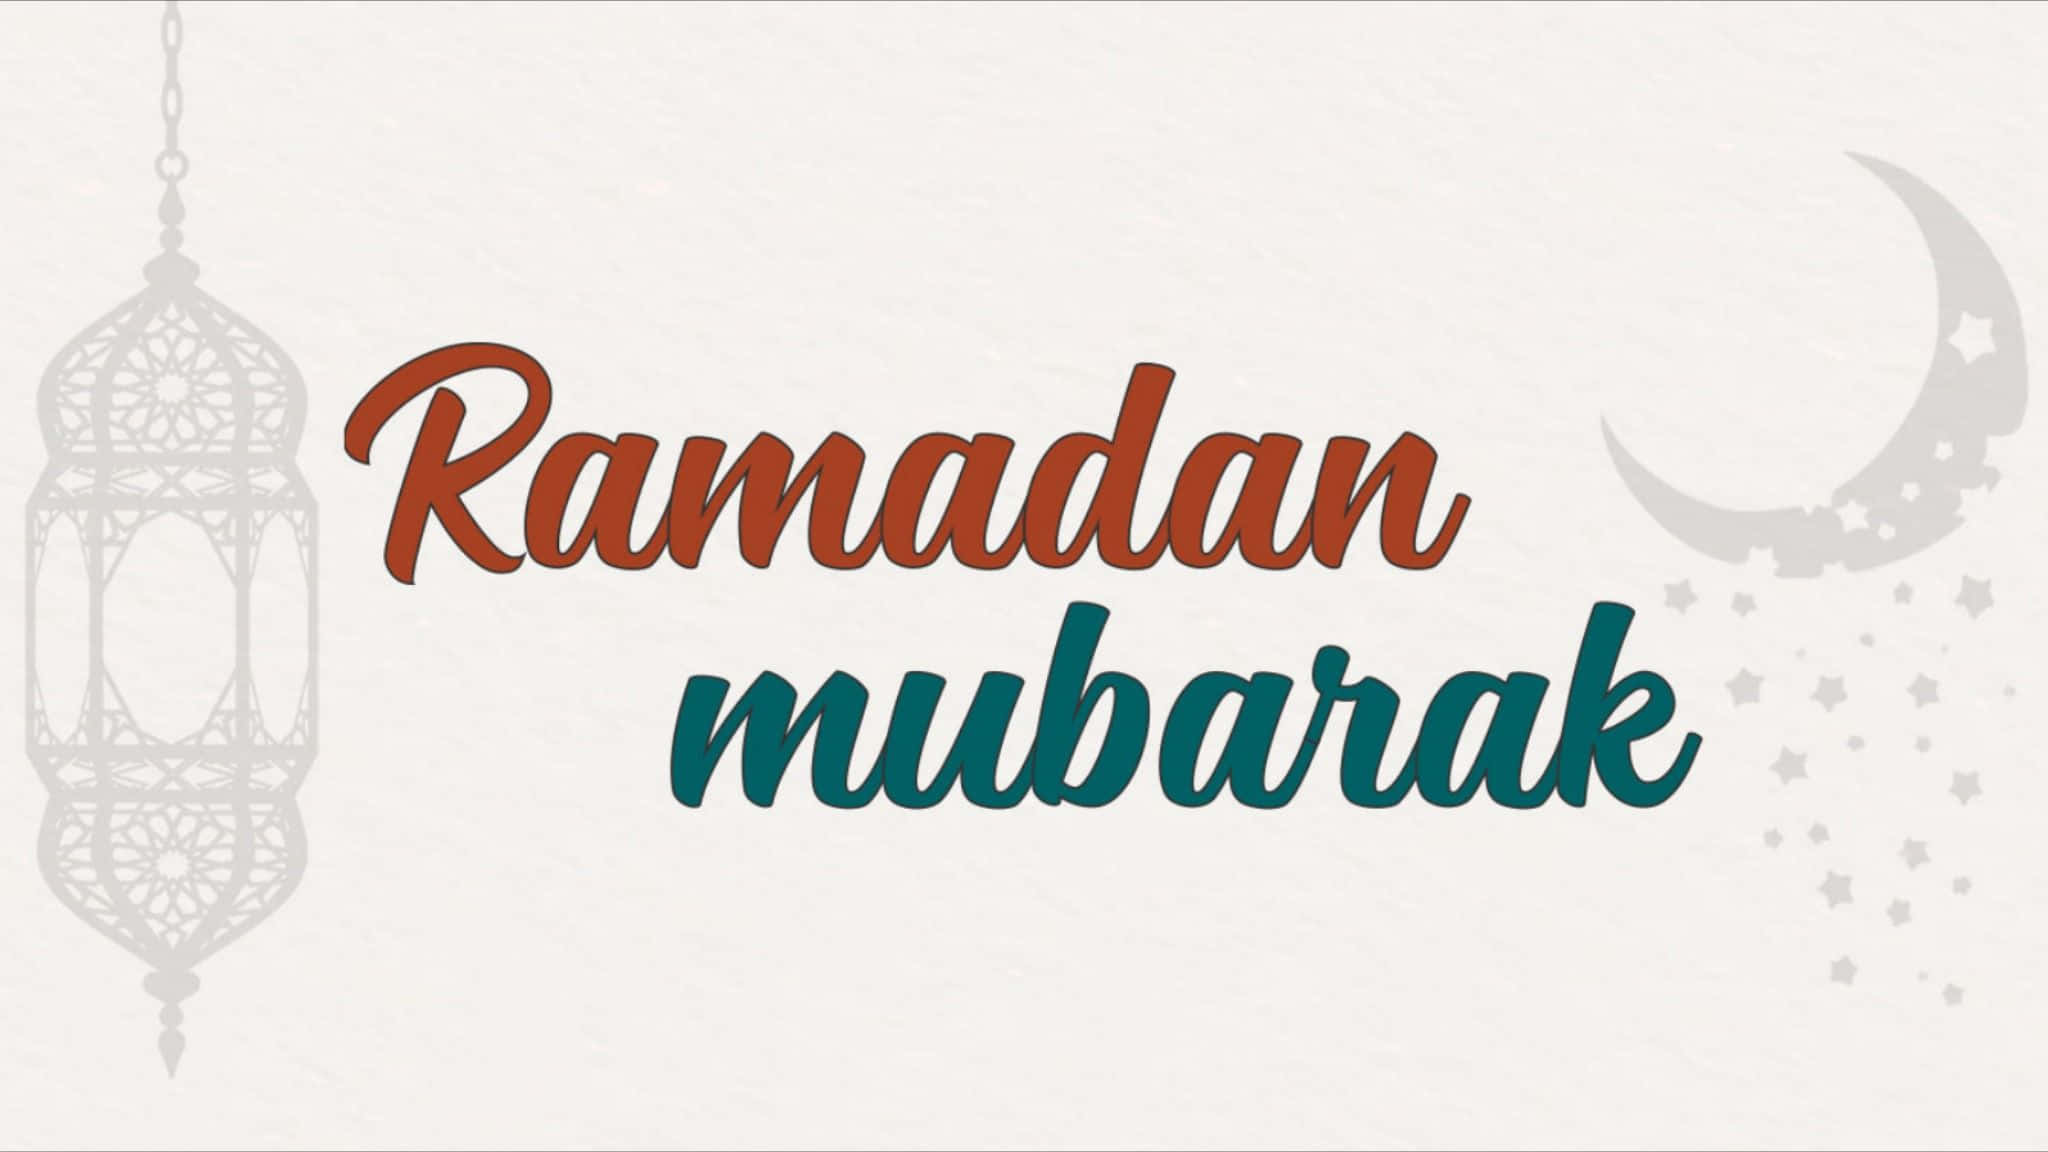 Ramadan Mubarak With A Lantern And Crescent